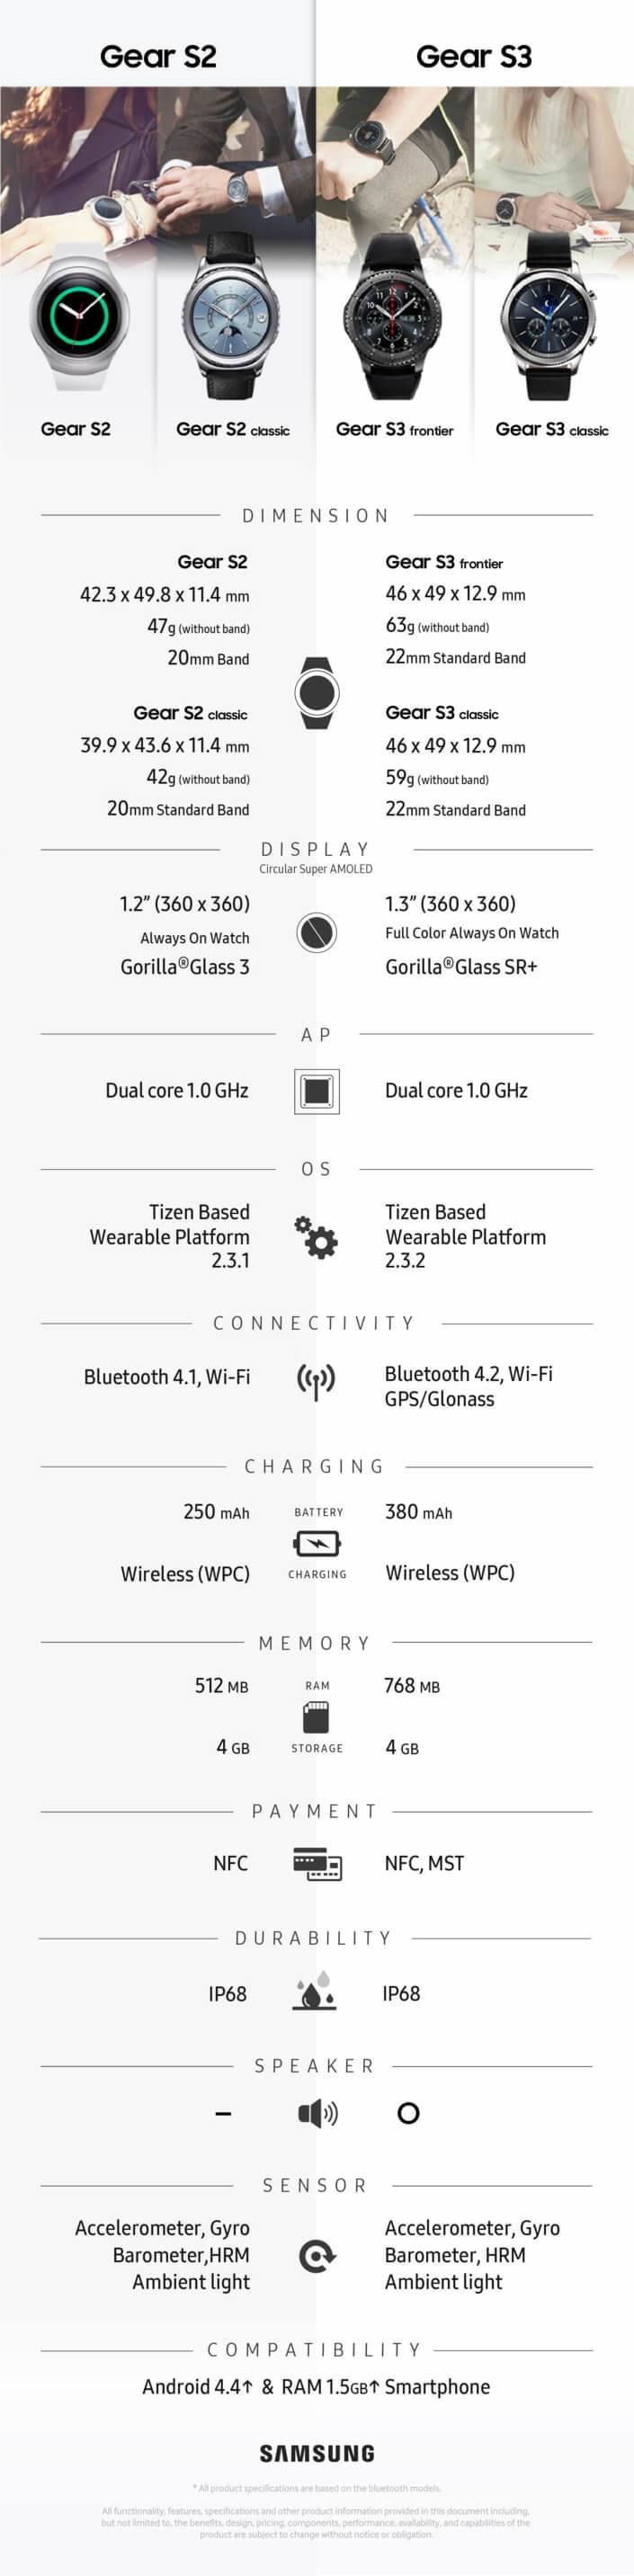 Samsung Gear S3 vs Gear S2 Infographic